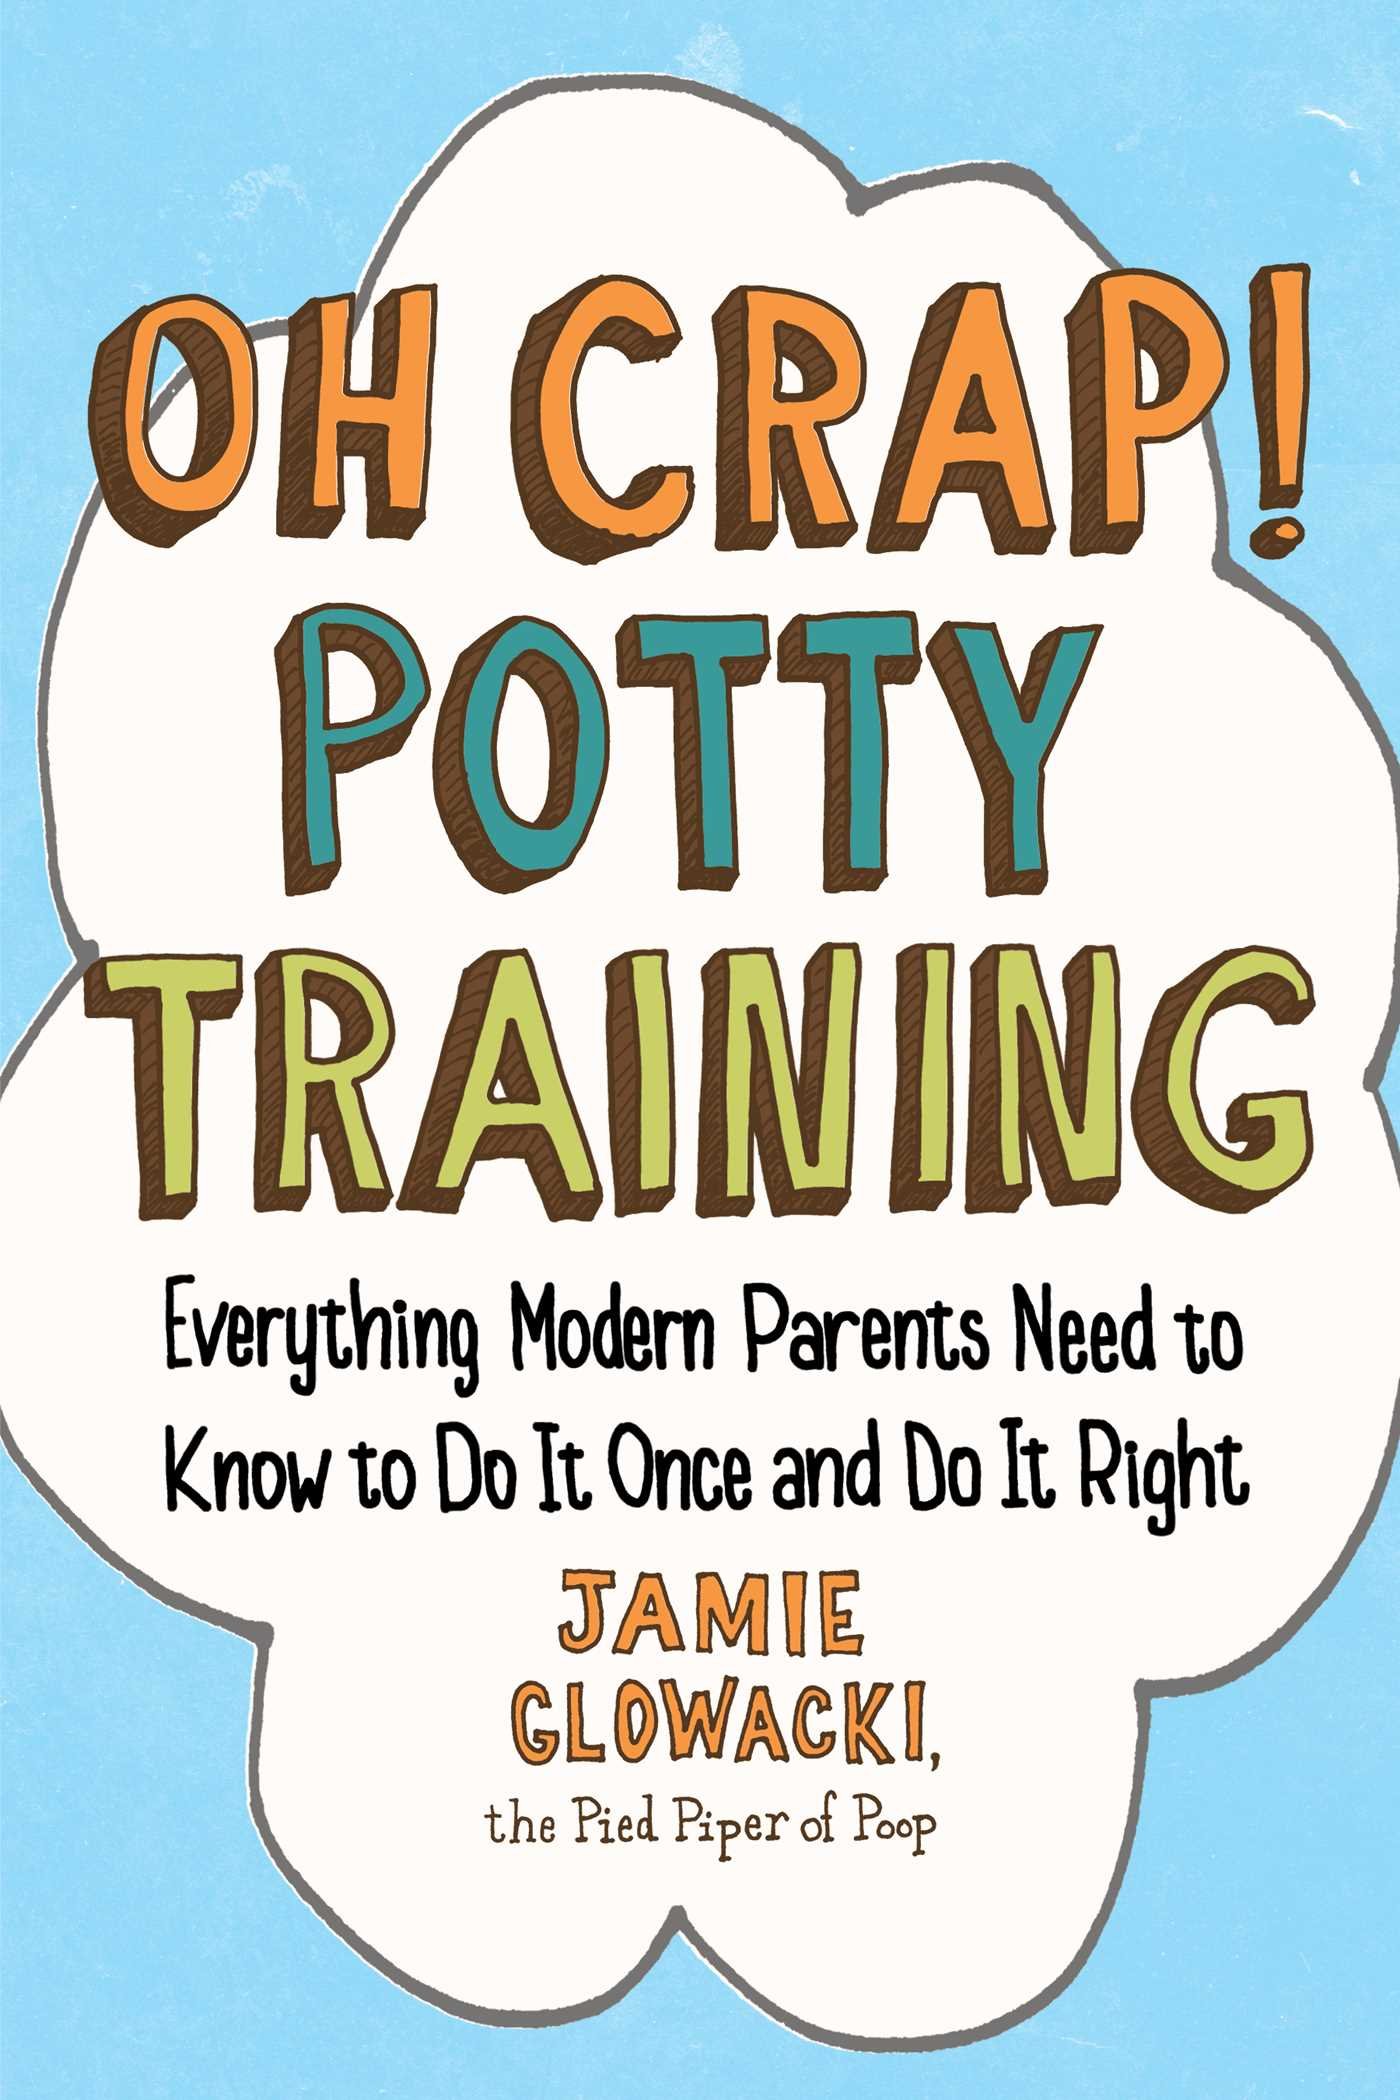 Oh Crap! Potty Training book